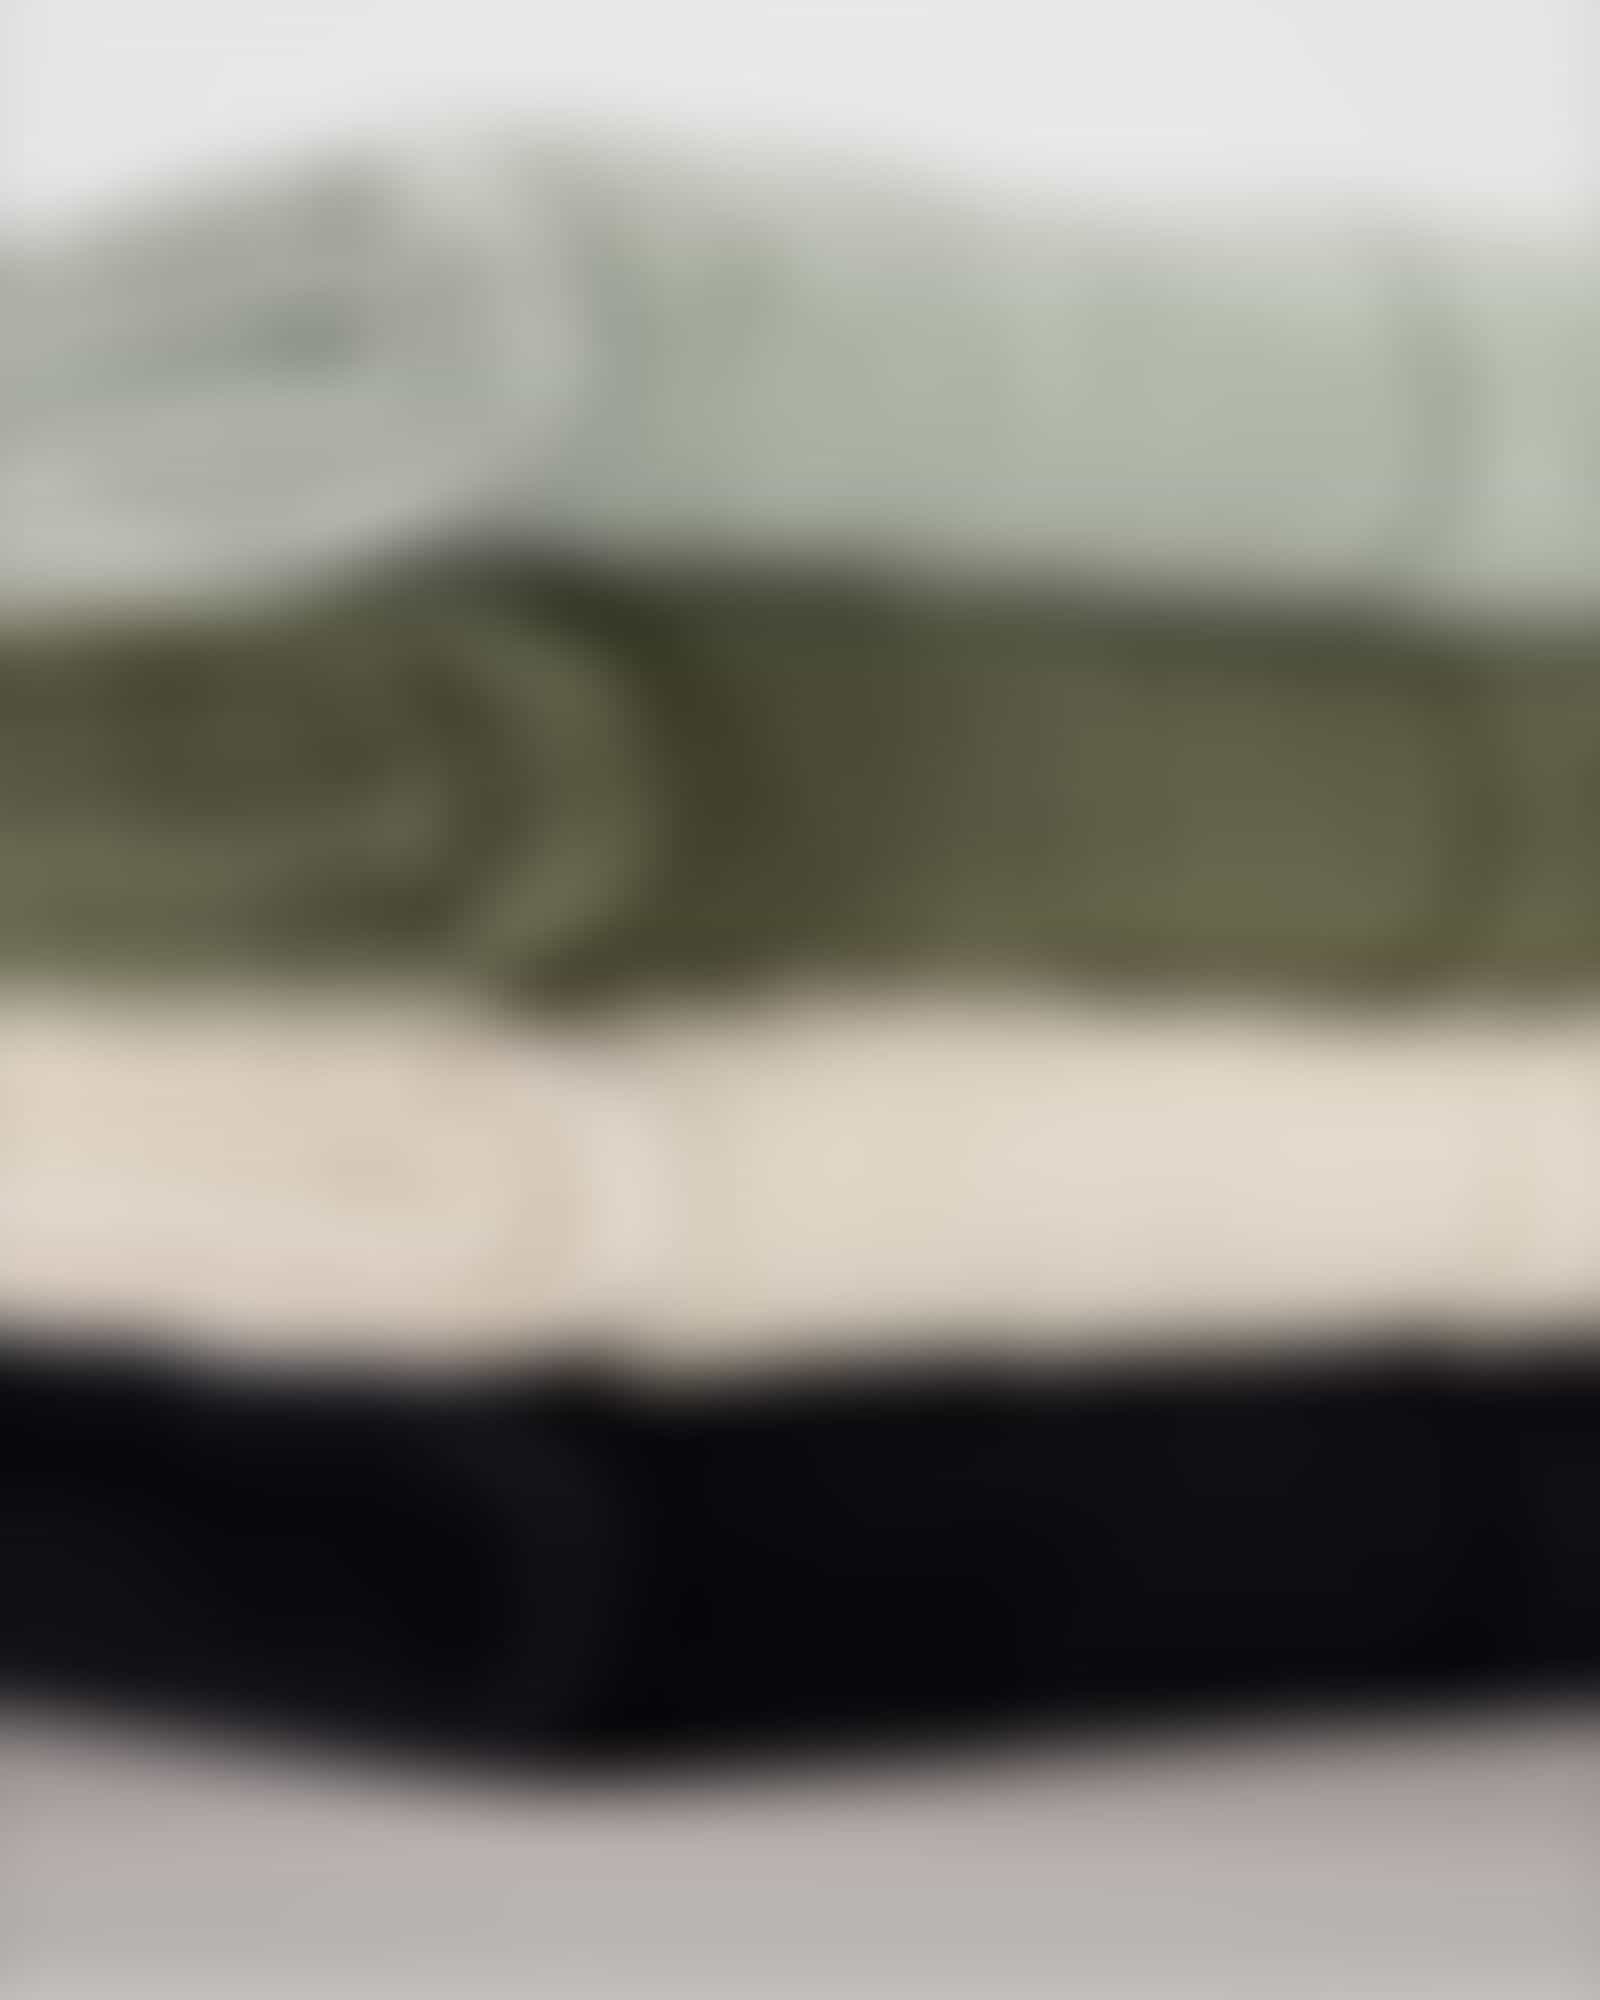 Villeroy &amp; Boch Handtücher One 2550 - Farbe: olive green - 453 - Handtuch 50x100 cm